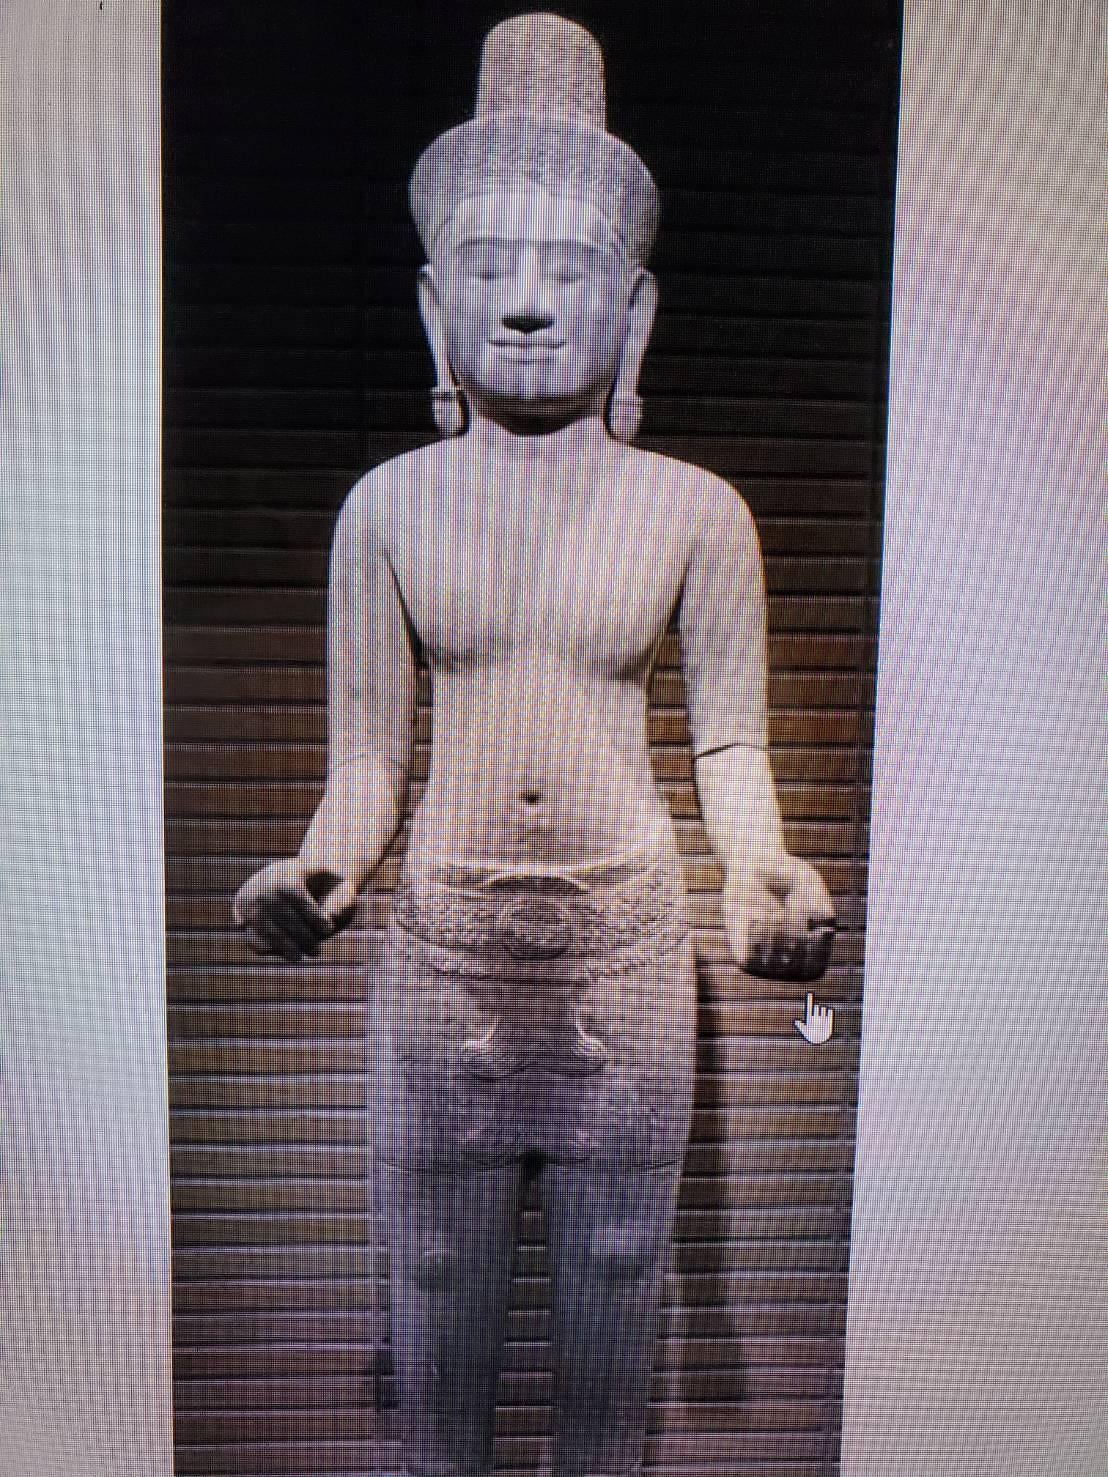 Khmer Antique Stone Buddha Head/14th-15th Century/Stone Buddha/Cambodia/Thailand 10